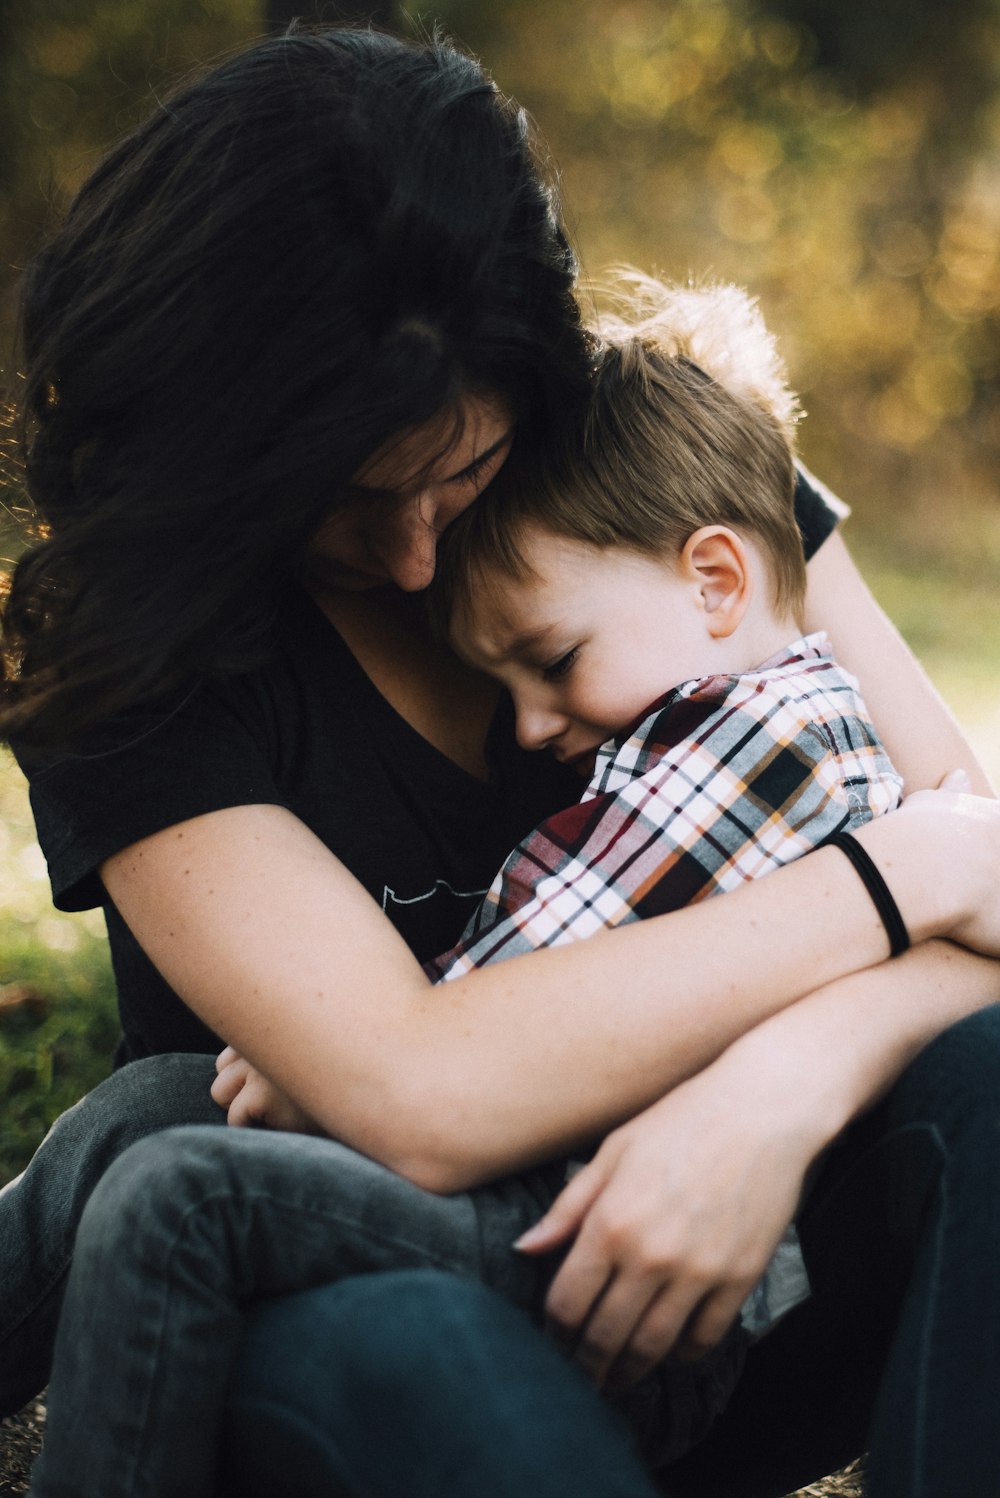 woman hugging boy on her lap photo – Free Family Image on Unsplash